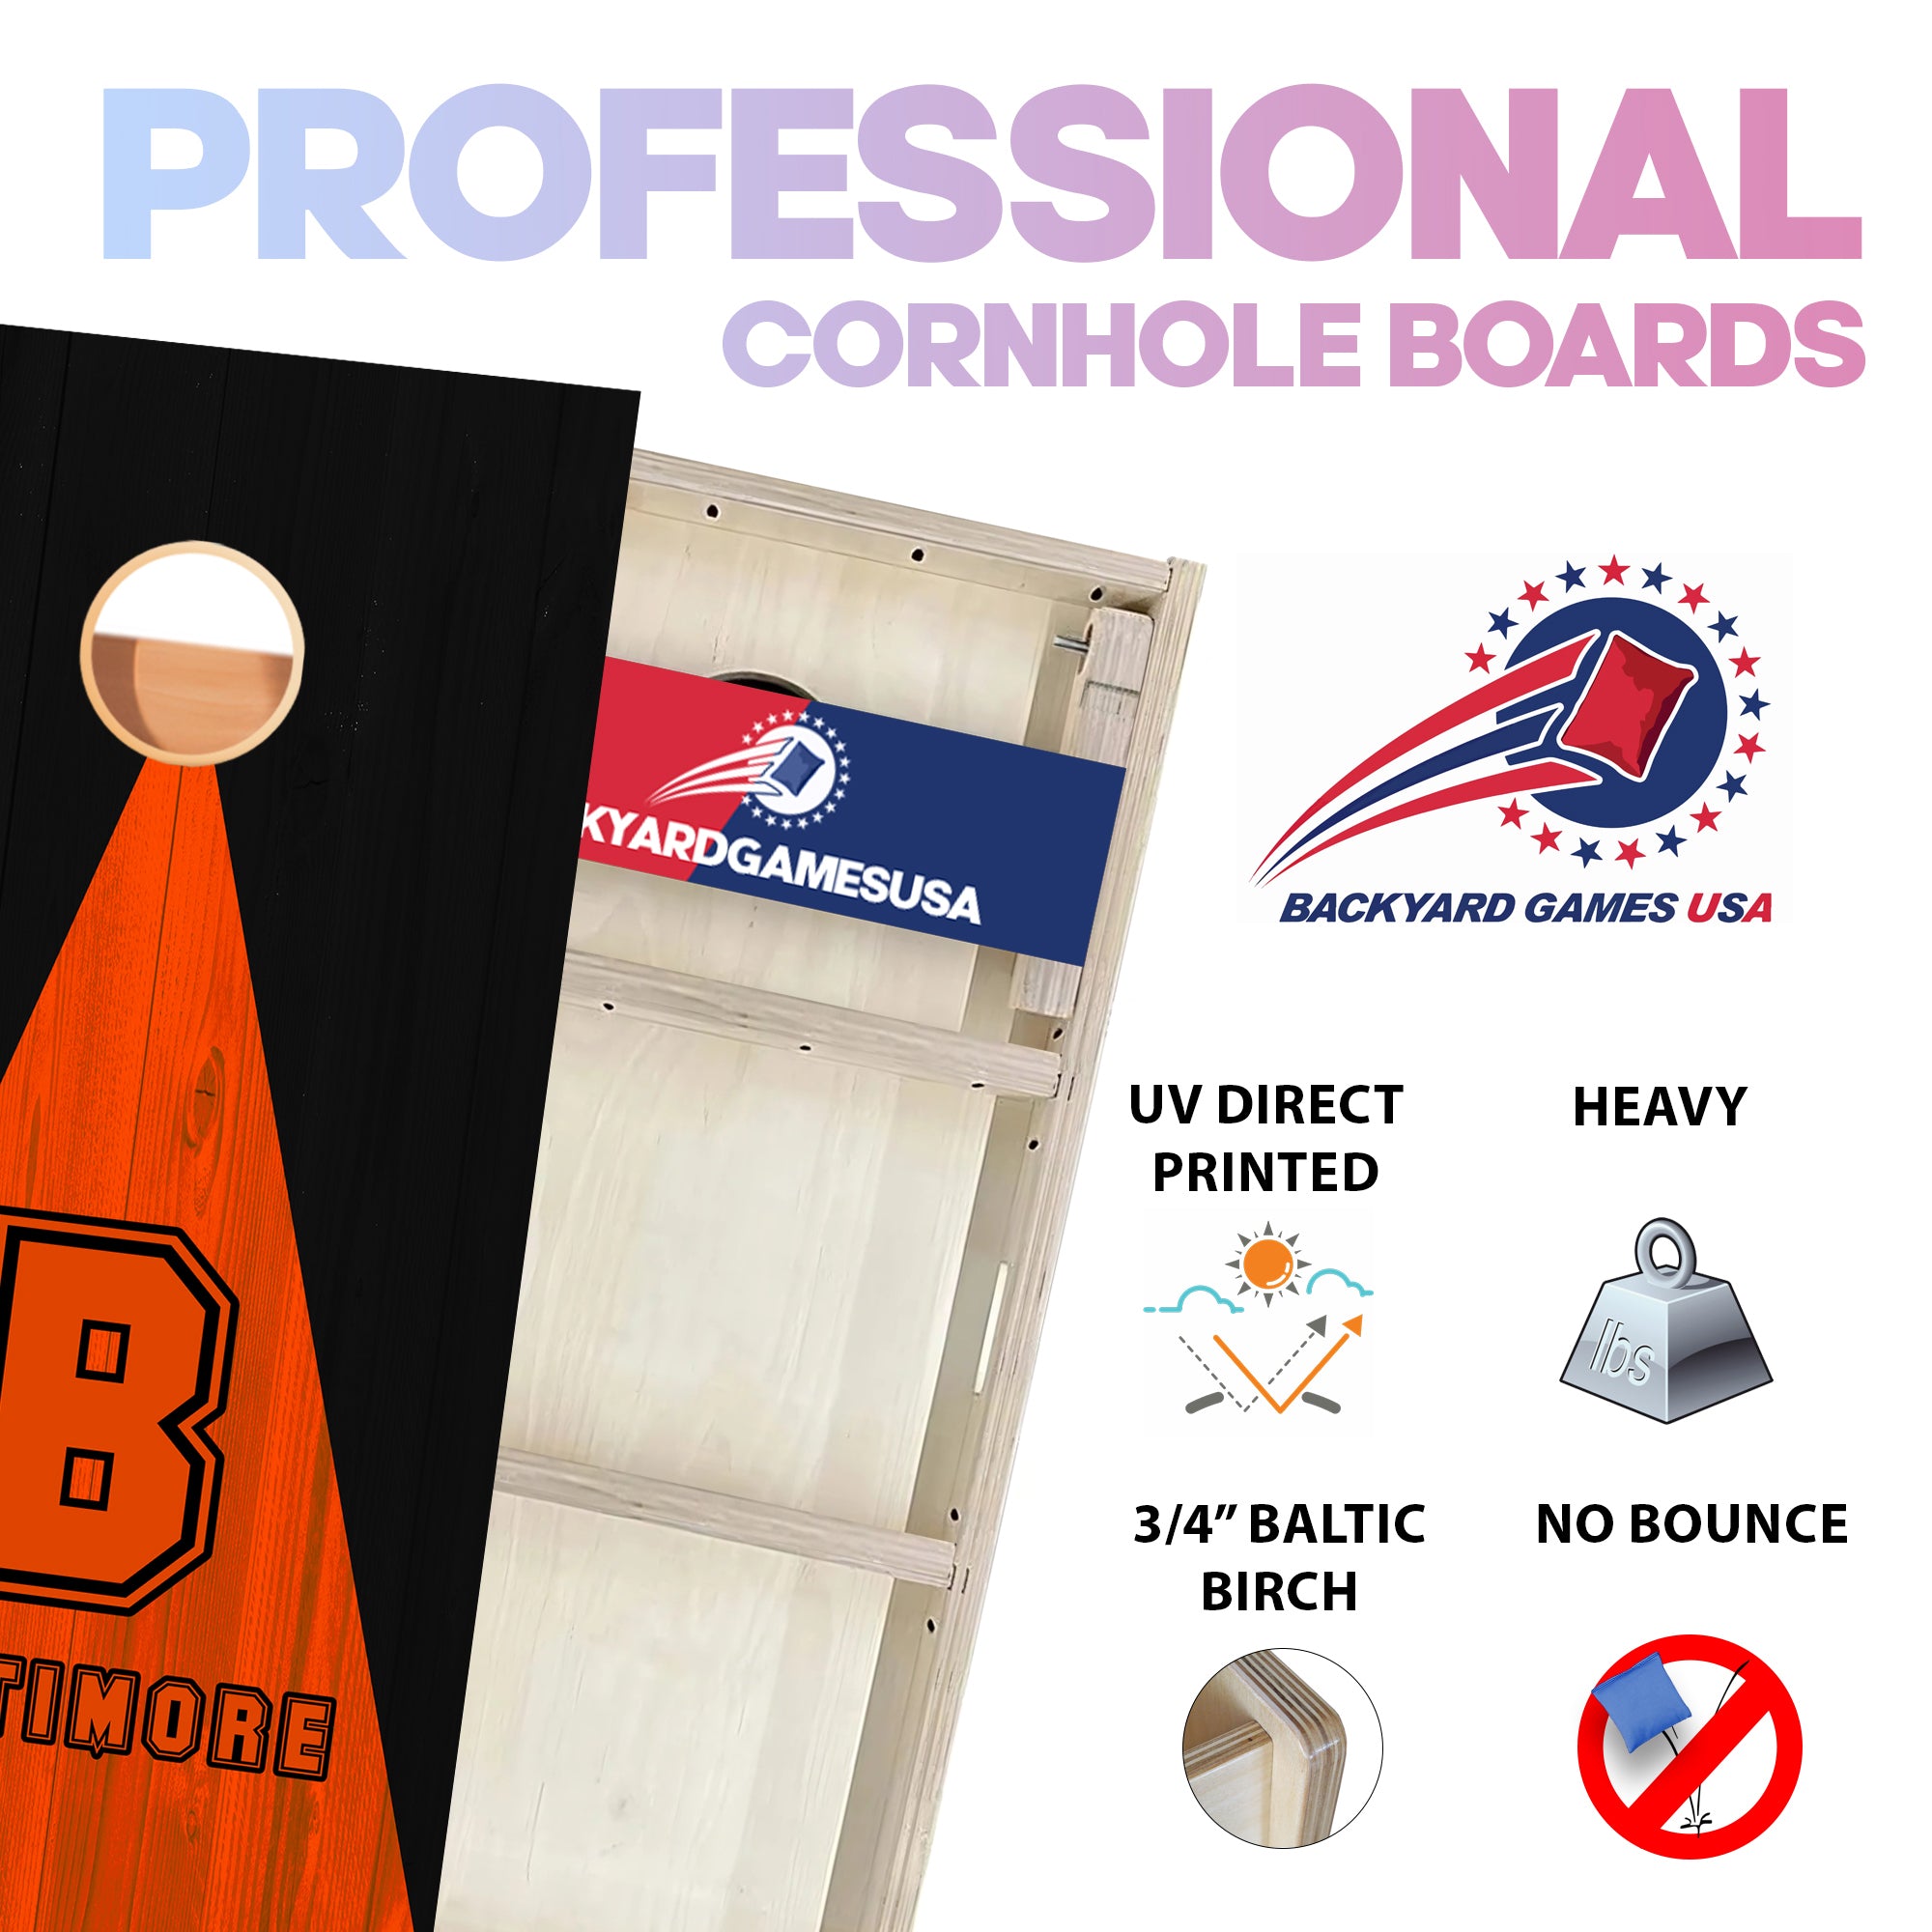 Baltimore Baseball Professional Cornhole Boards